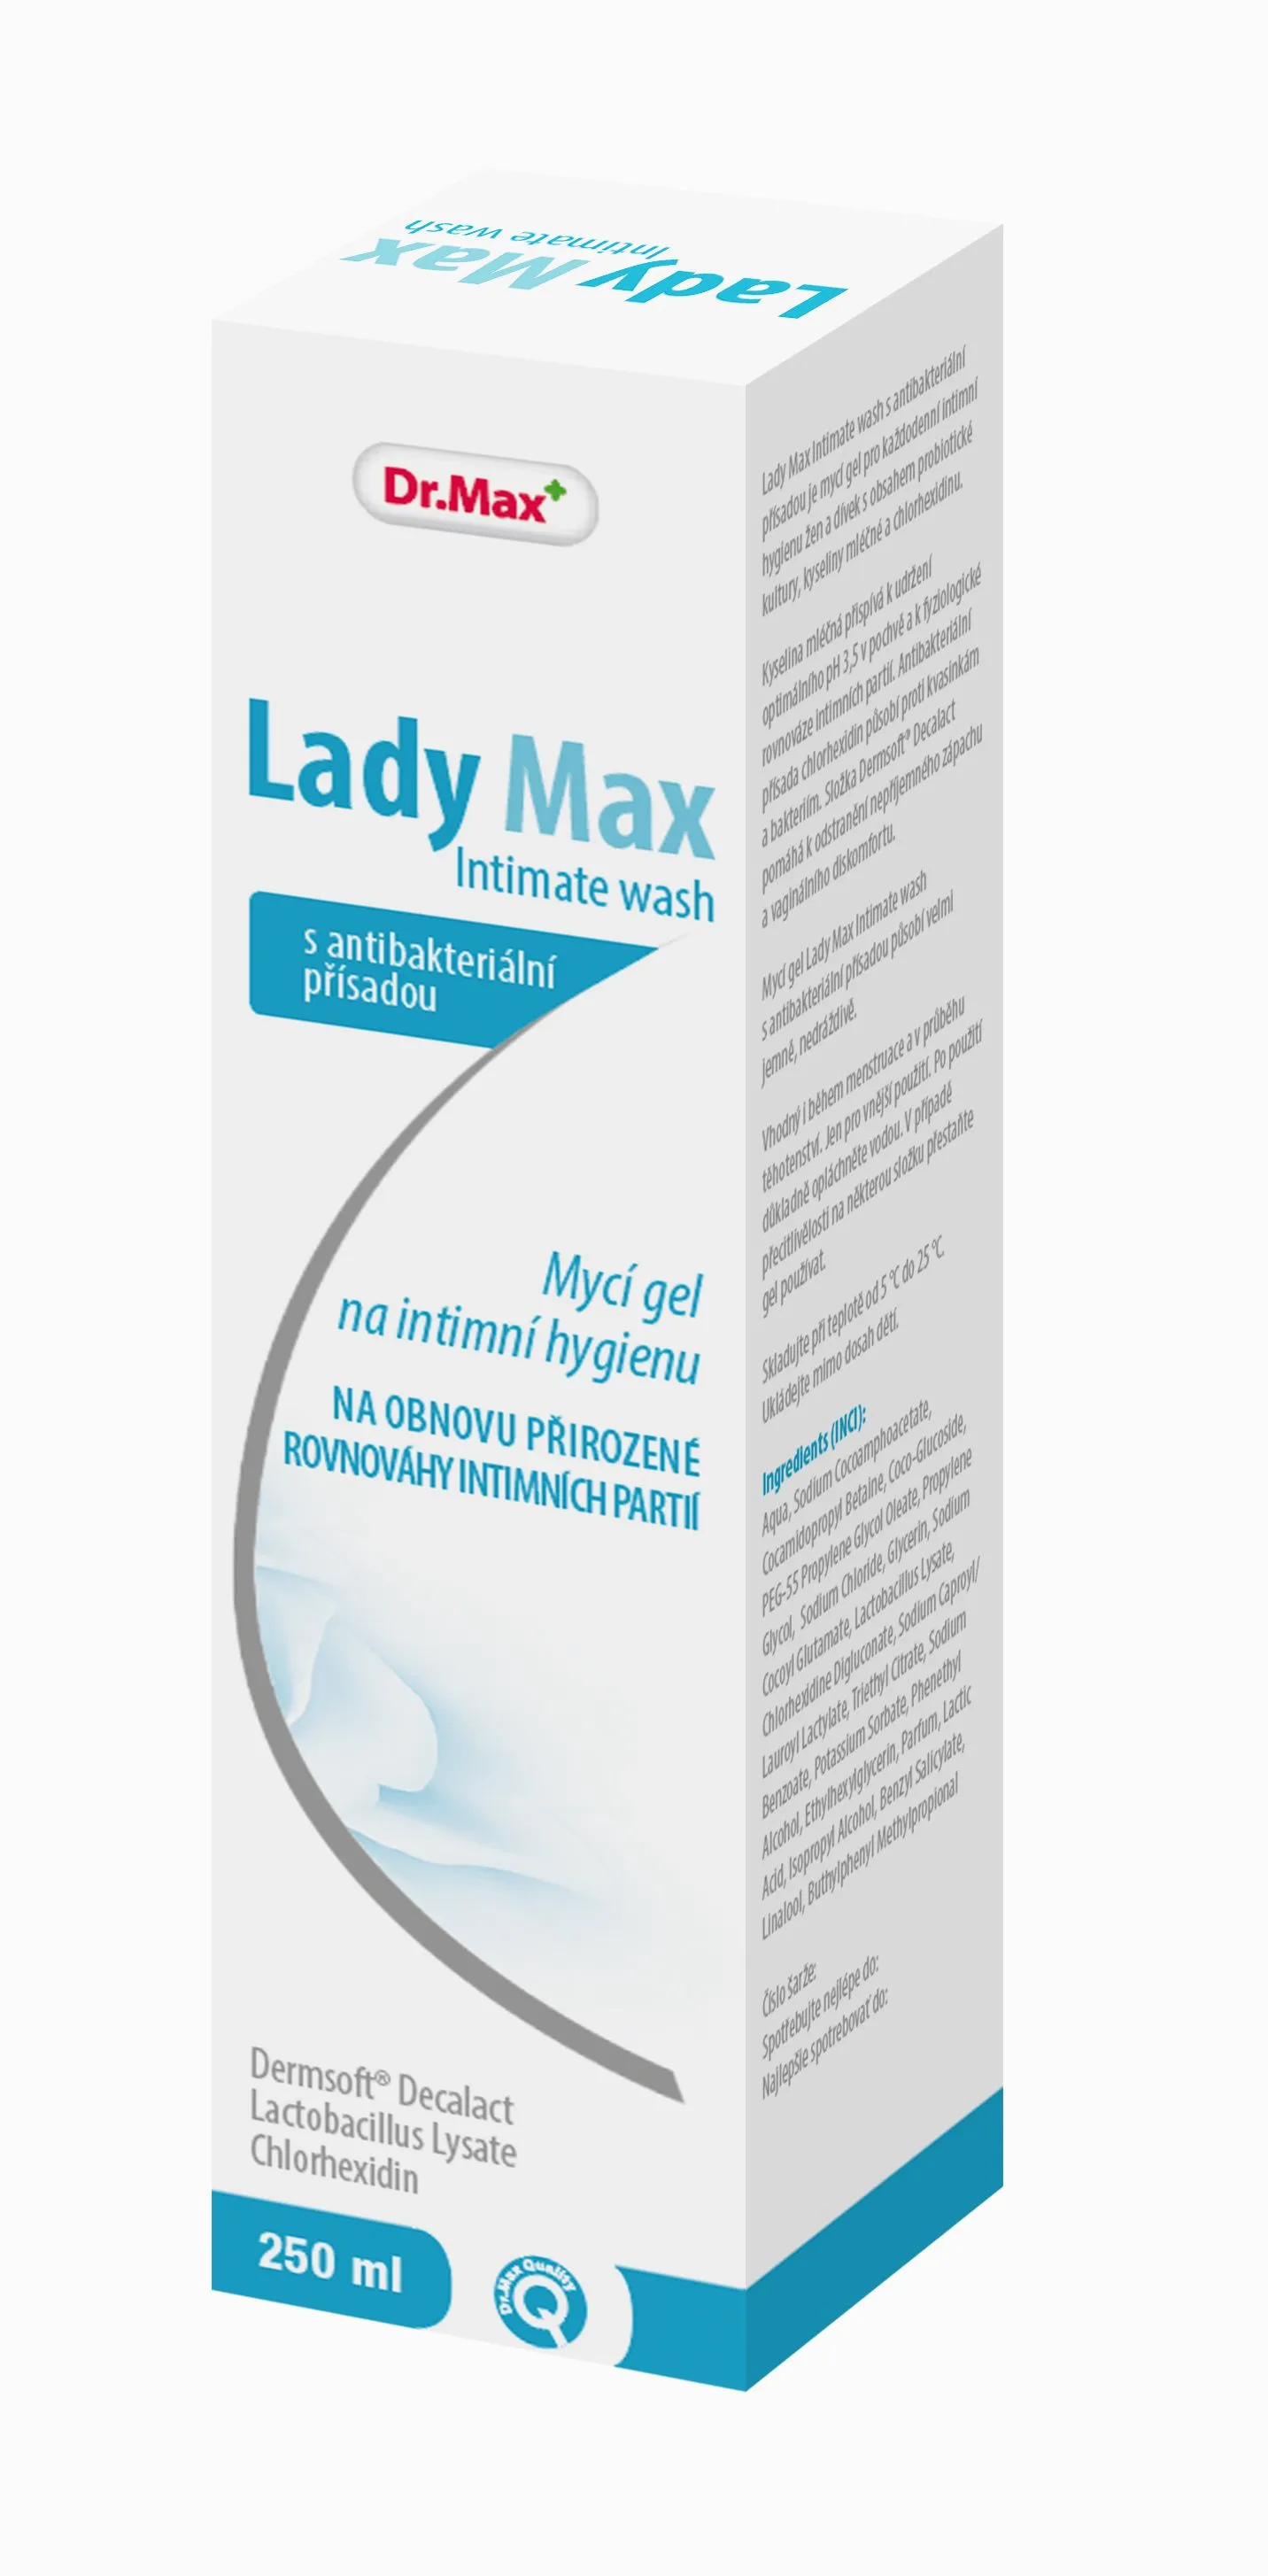 Dr. Max Lady Max Intimate wash antibacterial 250 ml